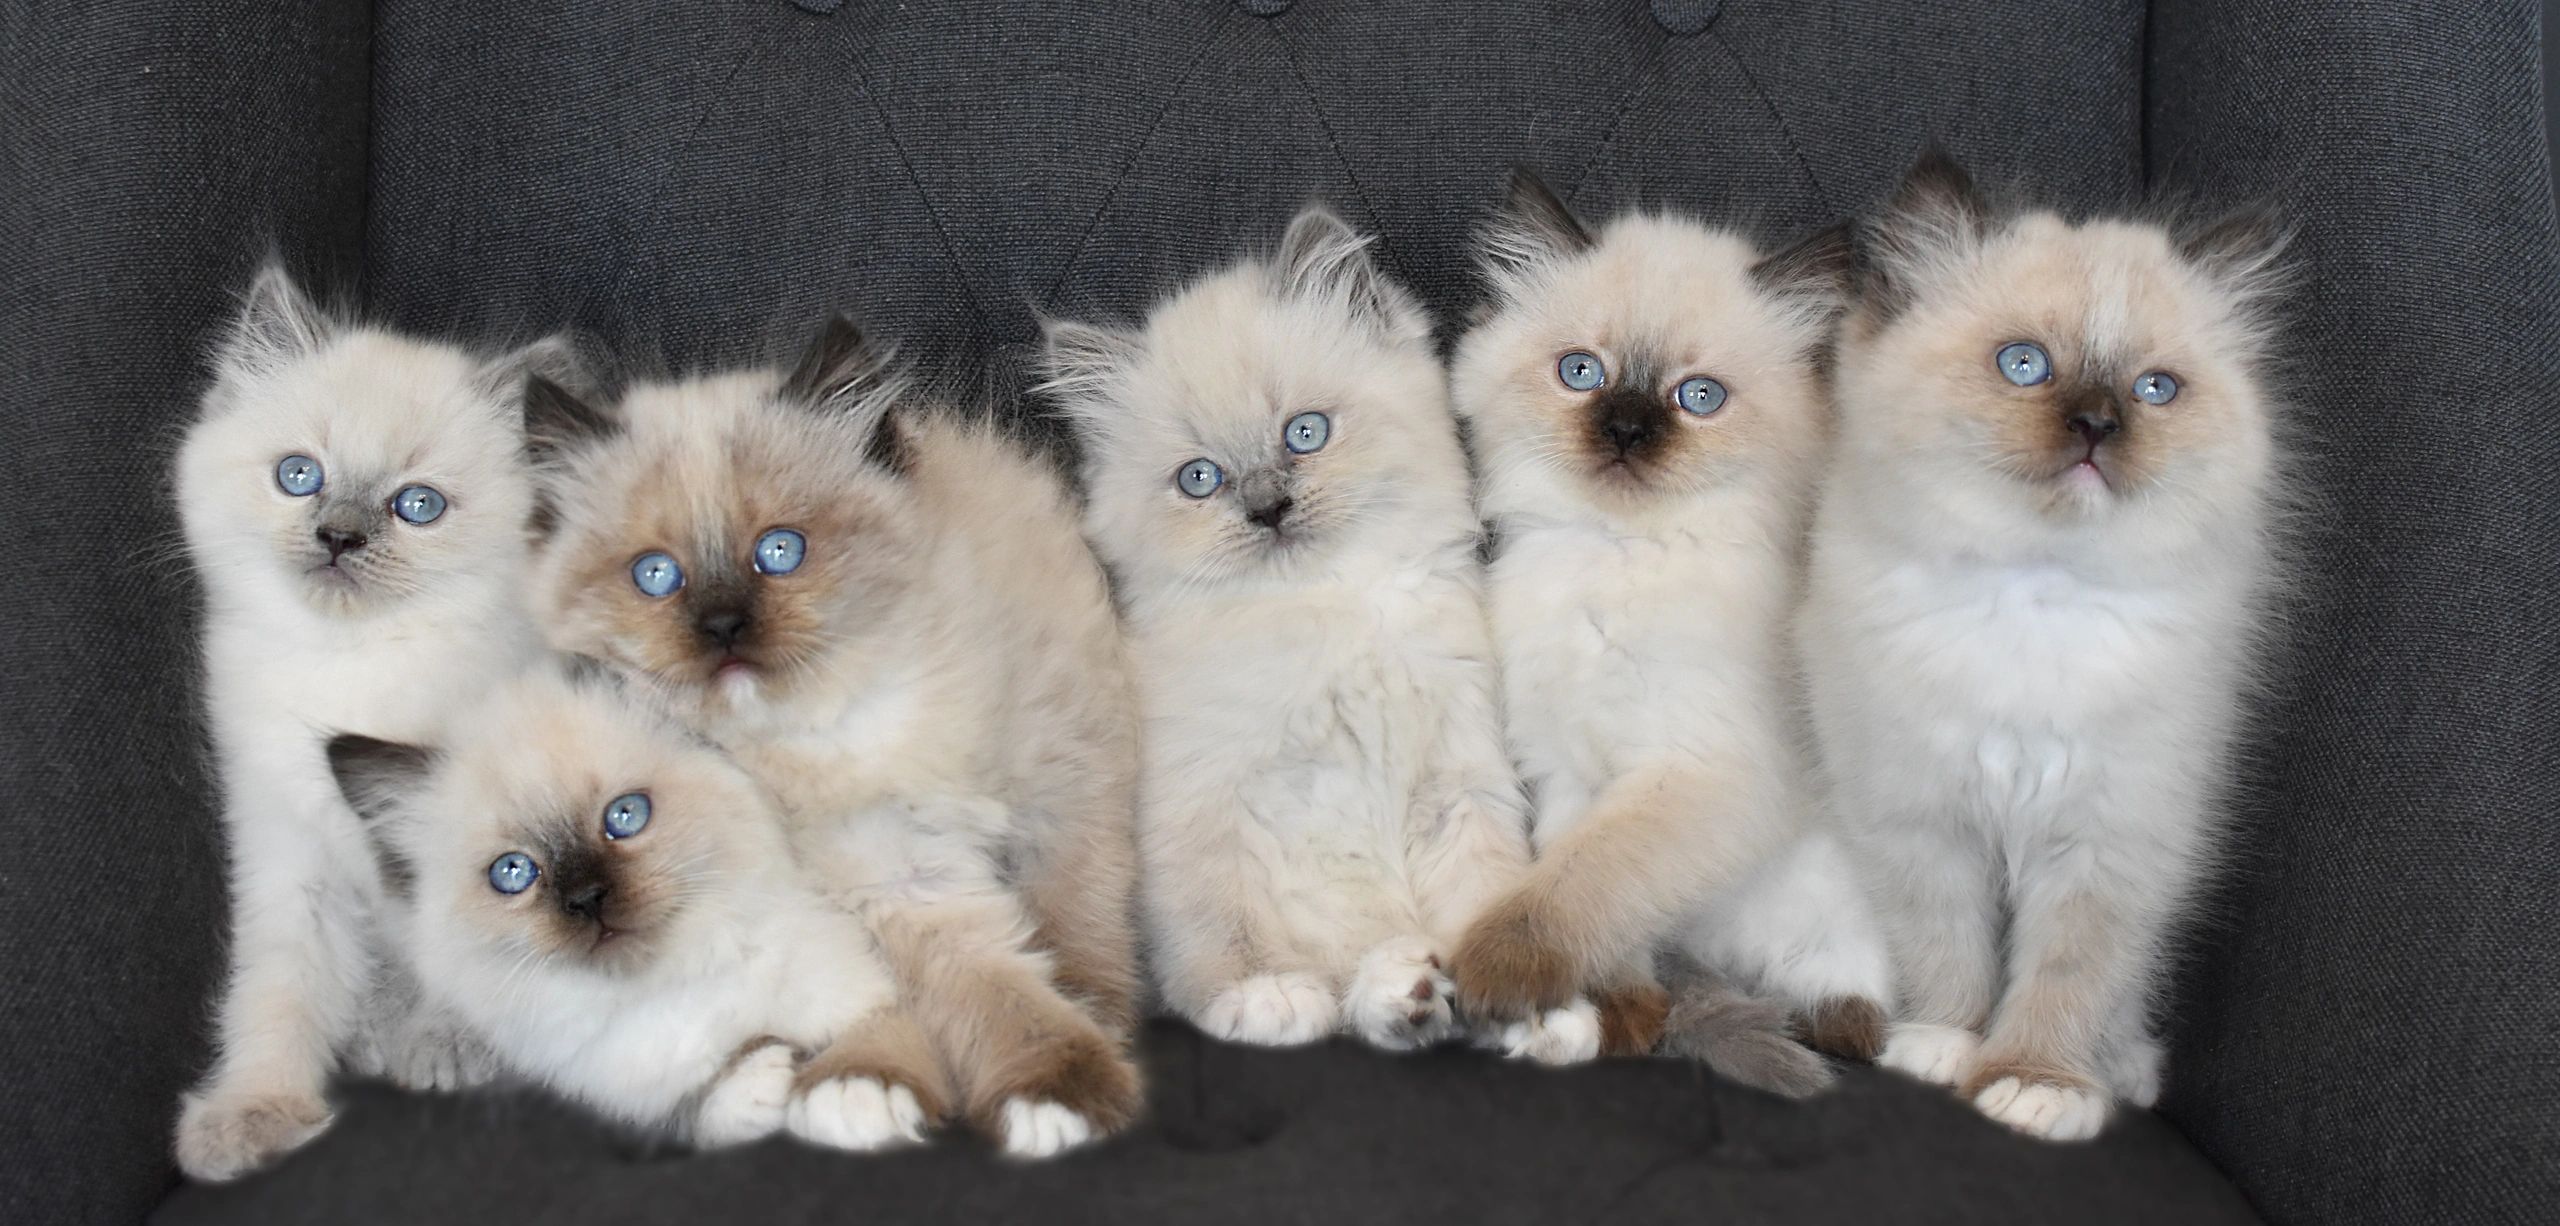 Elite Ragdolls: Providing quality kittens to loving families